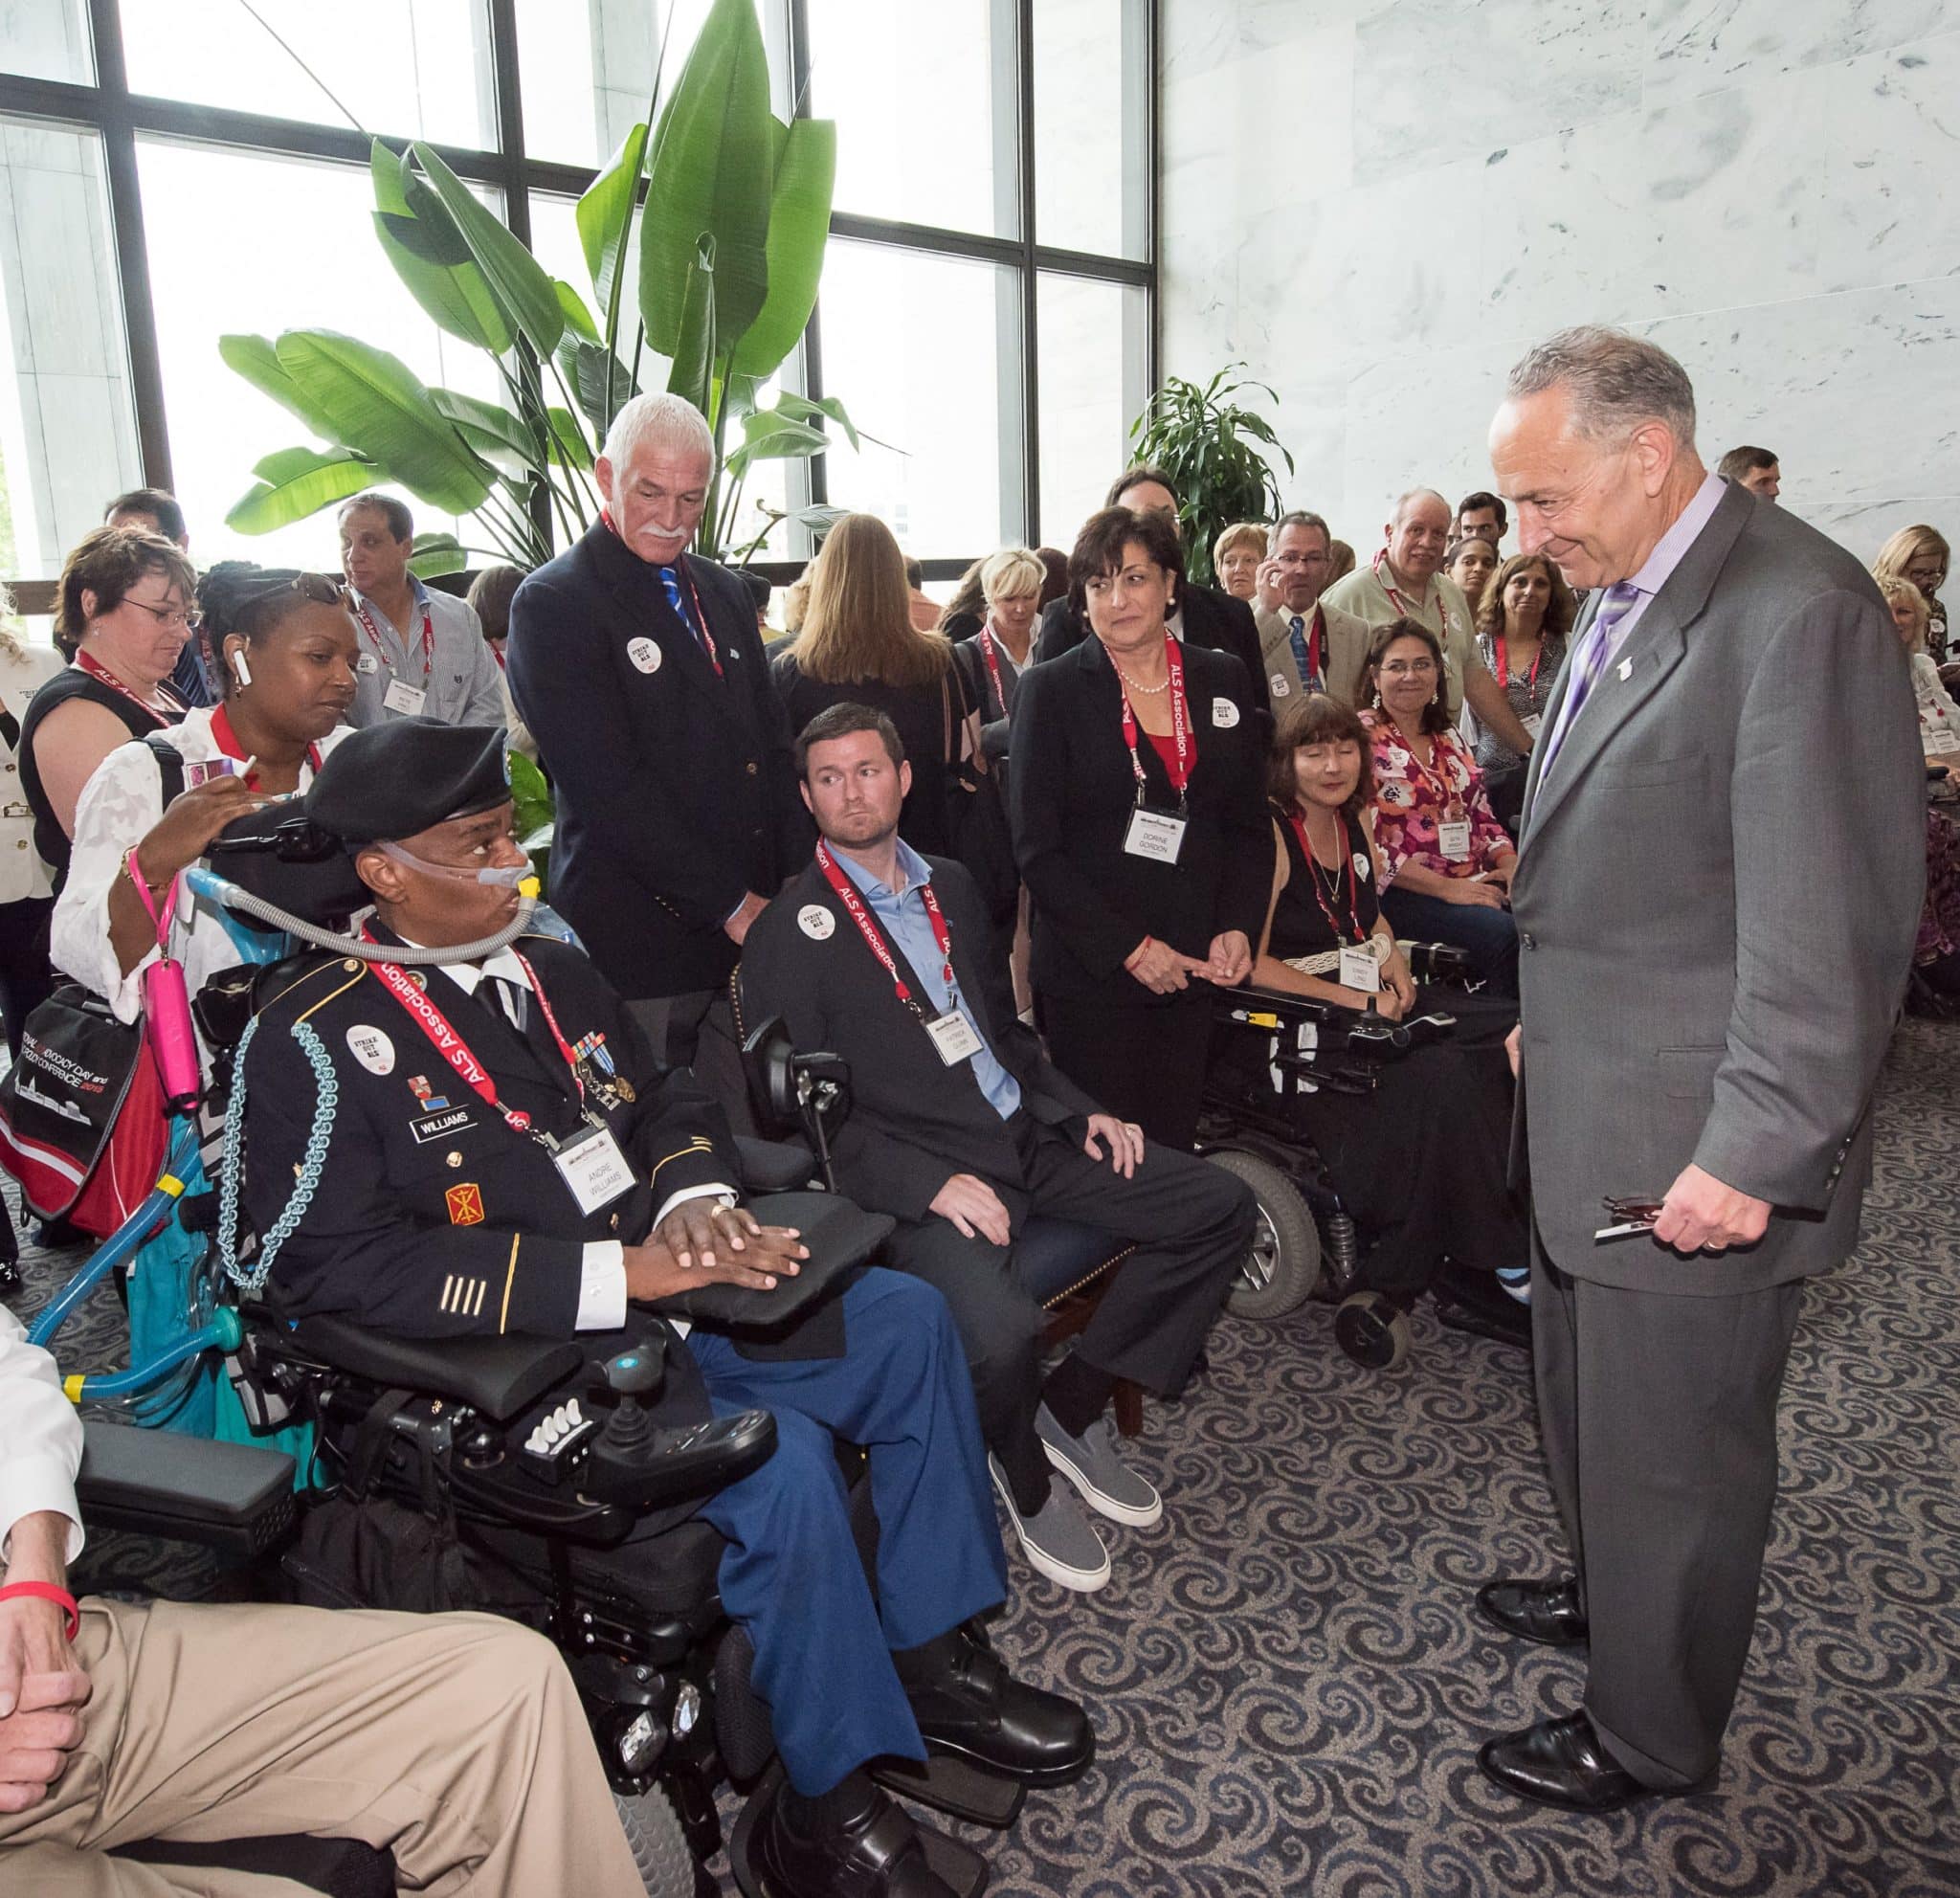 Senator Schumer and veteran with ALS